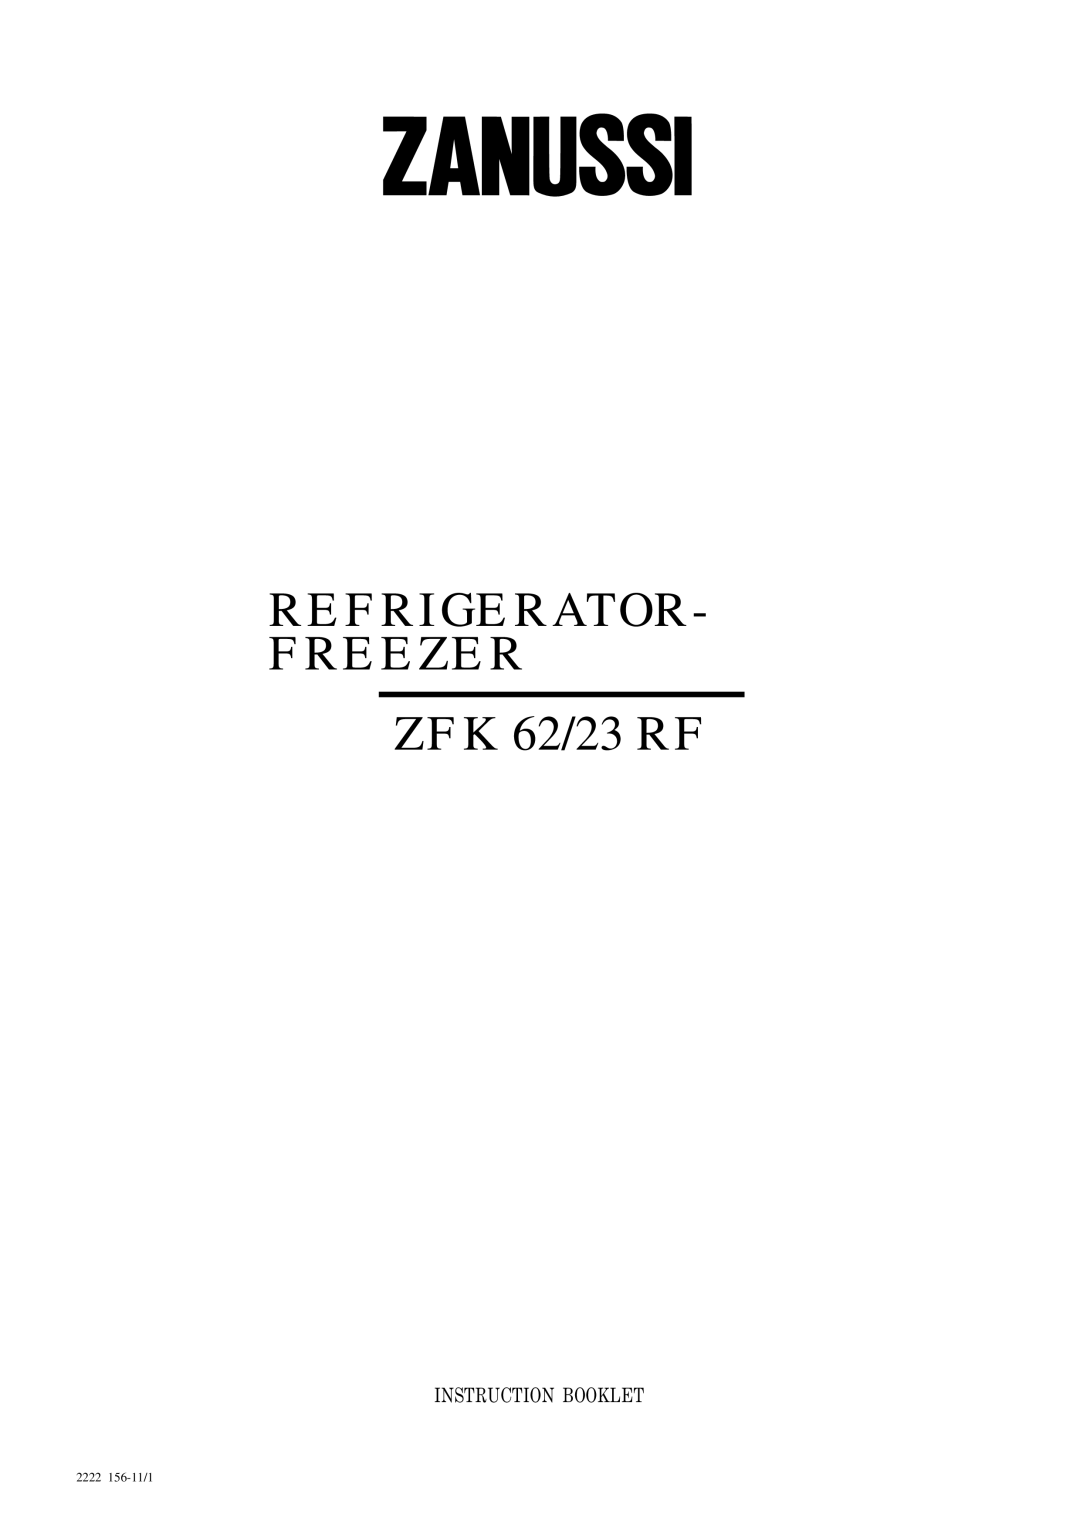 Zanussi manual REFRIGERATOR FREEZER ZFK 62/23 RF, Instruction Booklet, 2222 156-11/1 